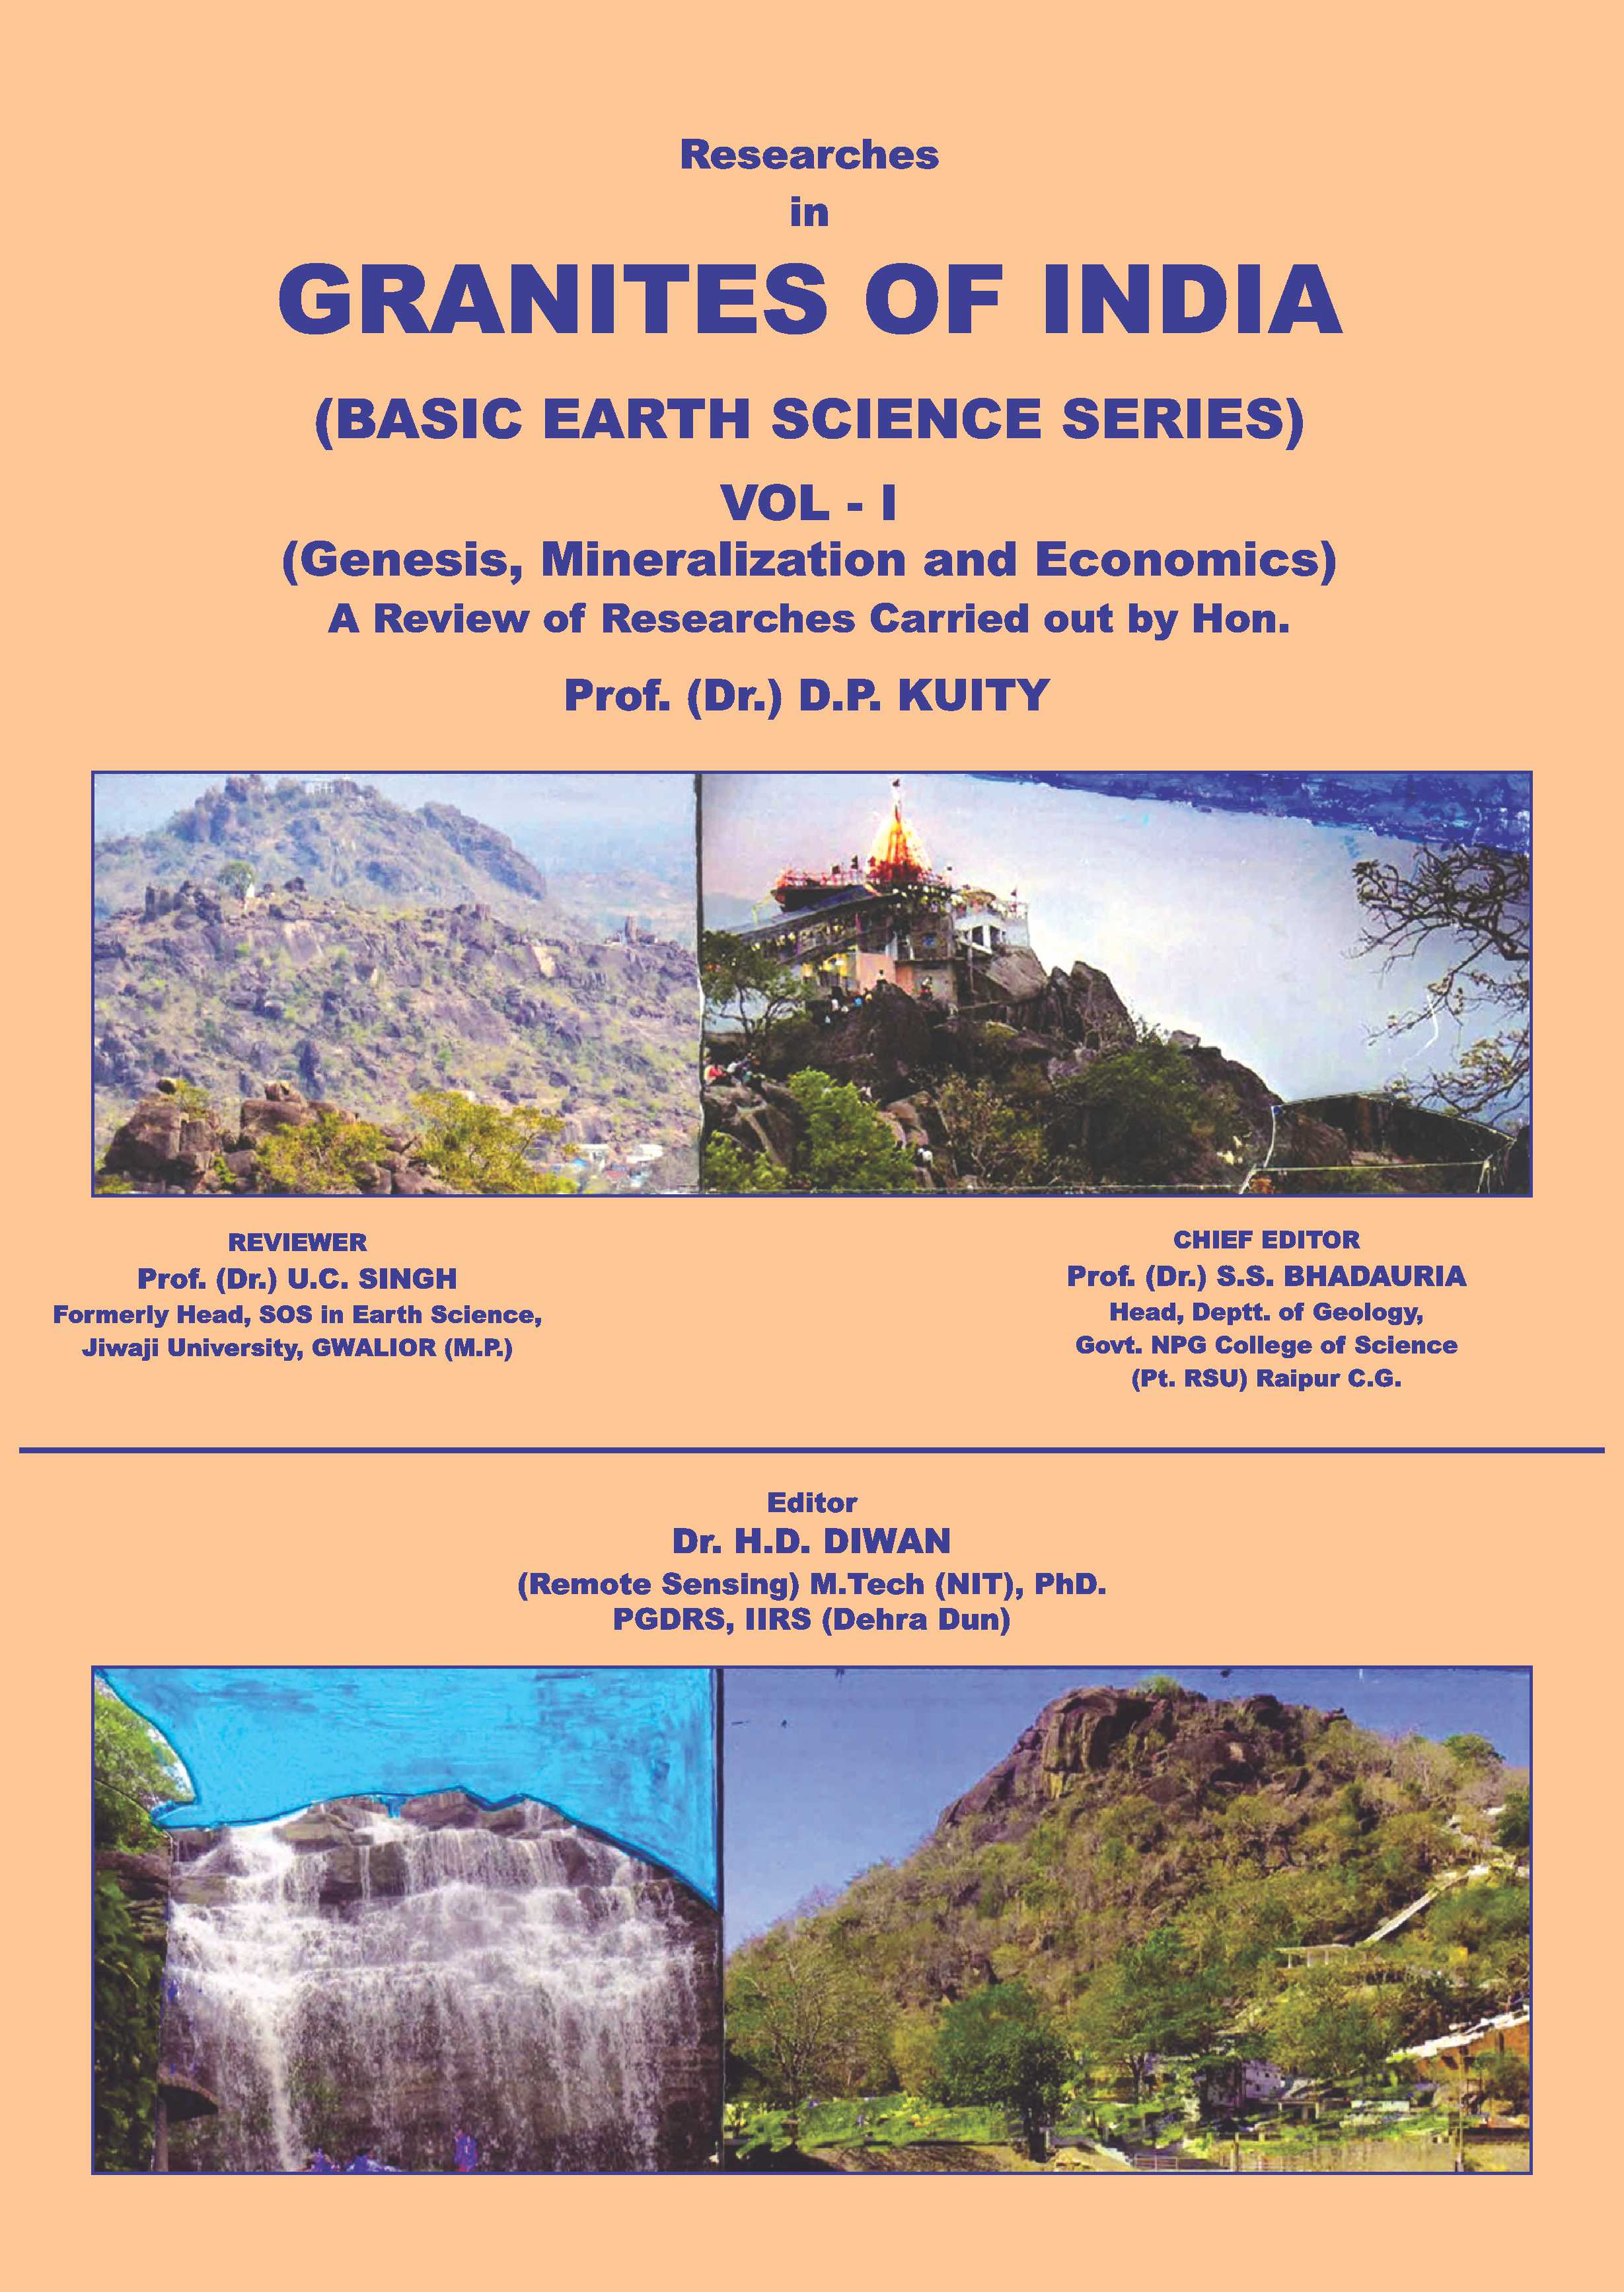 GRANITES OF INDIA (BASIC EARTH SCIENCE SERIES) (Genesis, Mineralization and Economics)